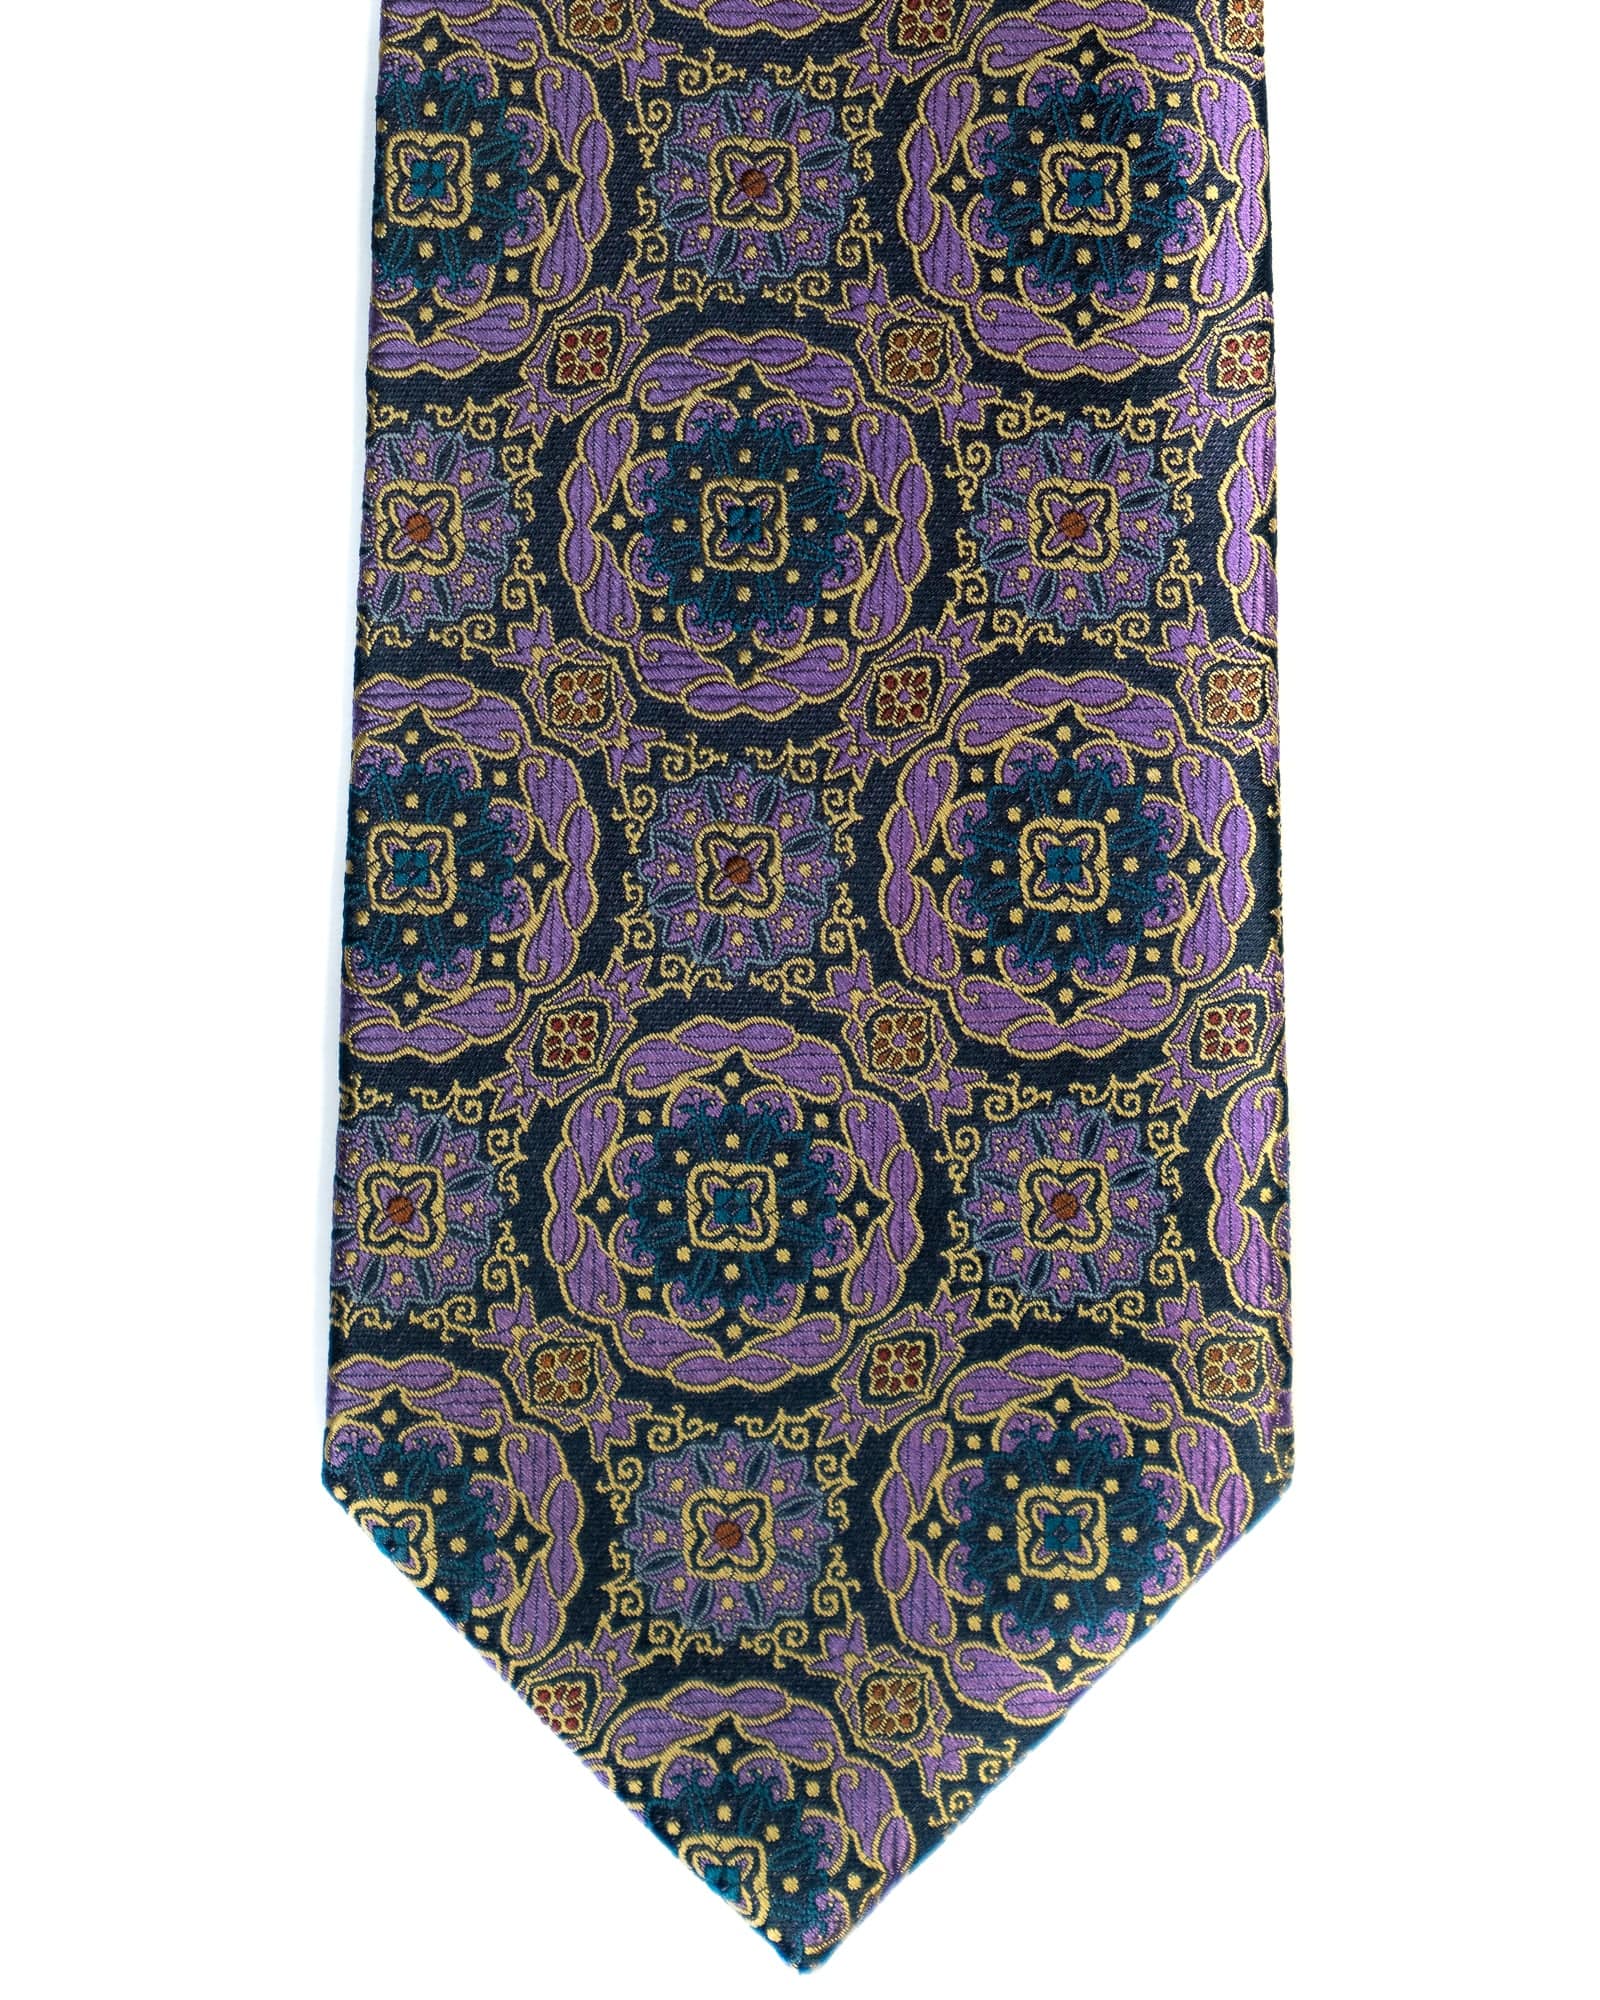 Silk Tie In Navy With Lavender Medallion Foulard Print - Rainwater's Men's Clothing and Tuxedo Rental